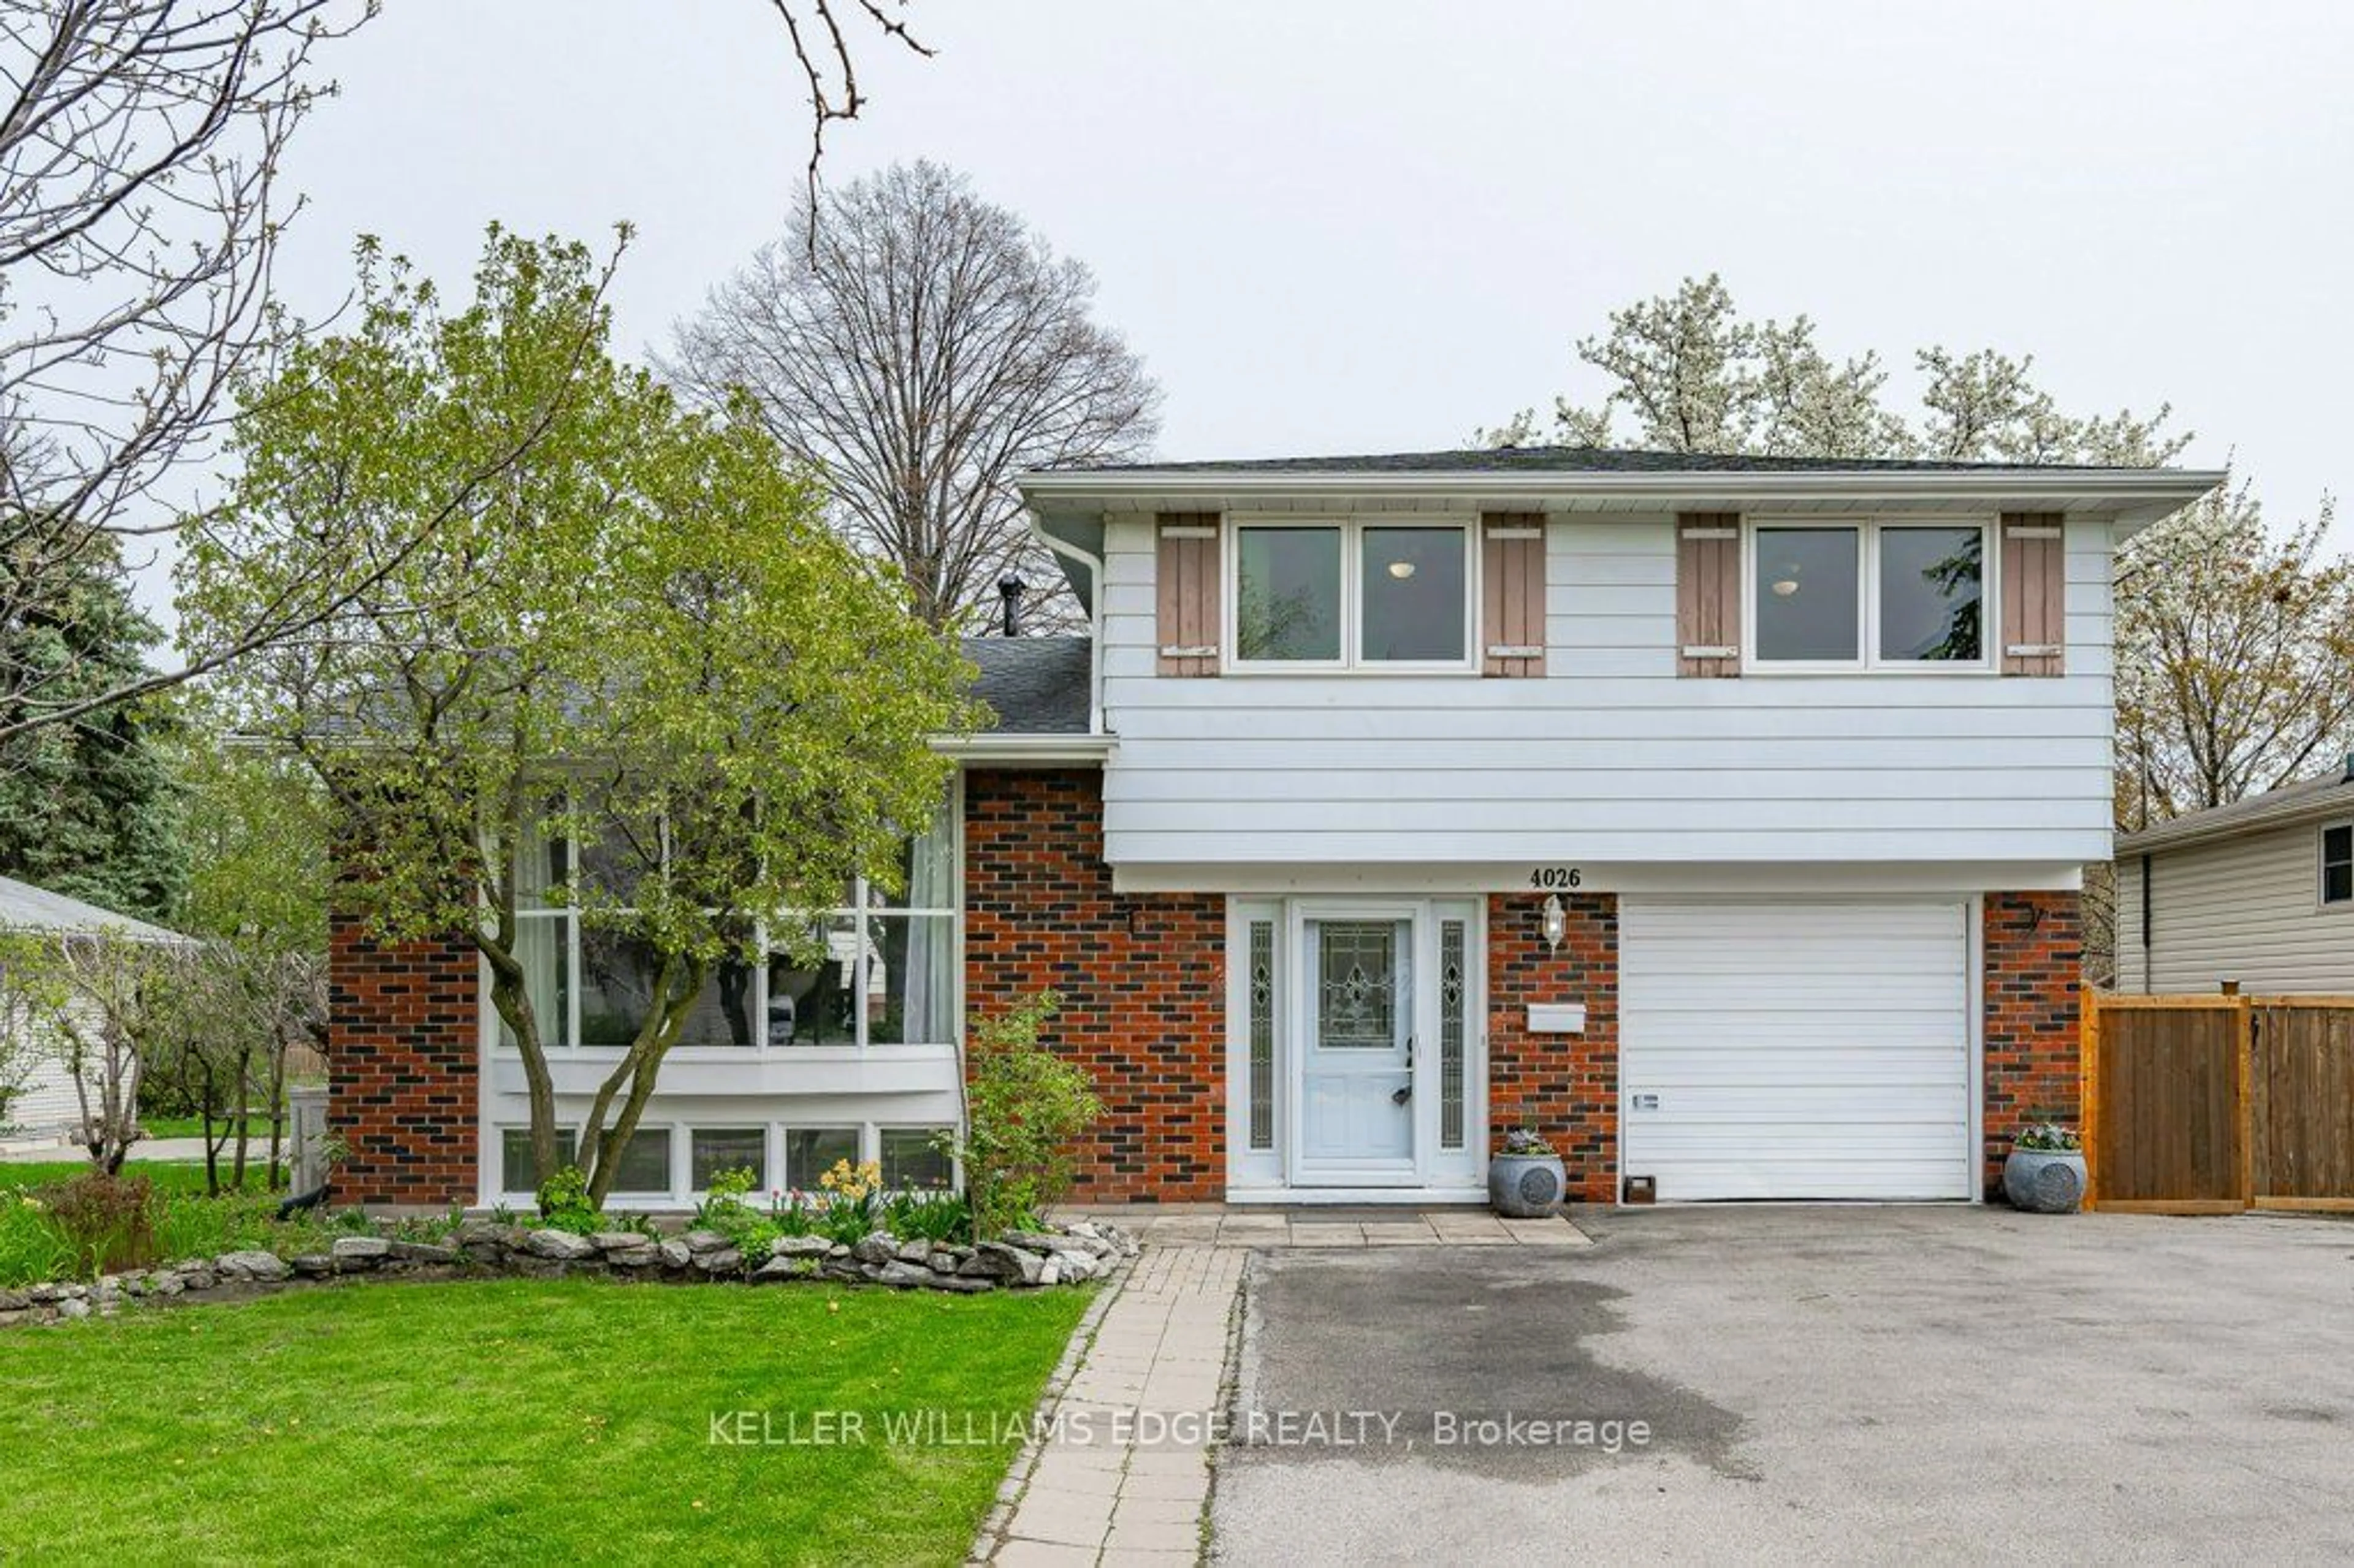 Home with brick exterior material for 4026 Flemish Dr, Burlington Ontario L7L 1Z5